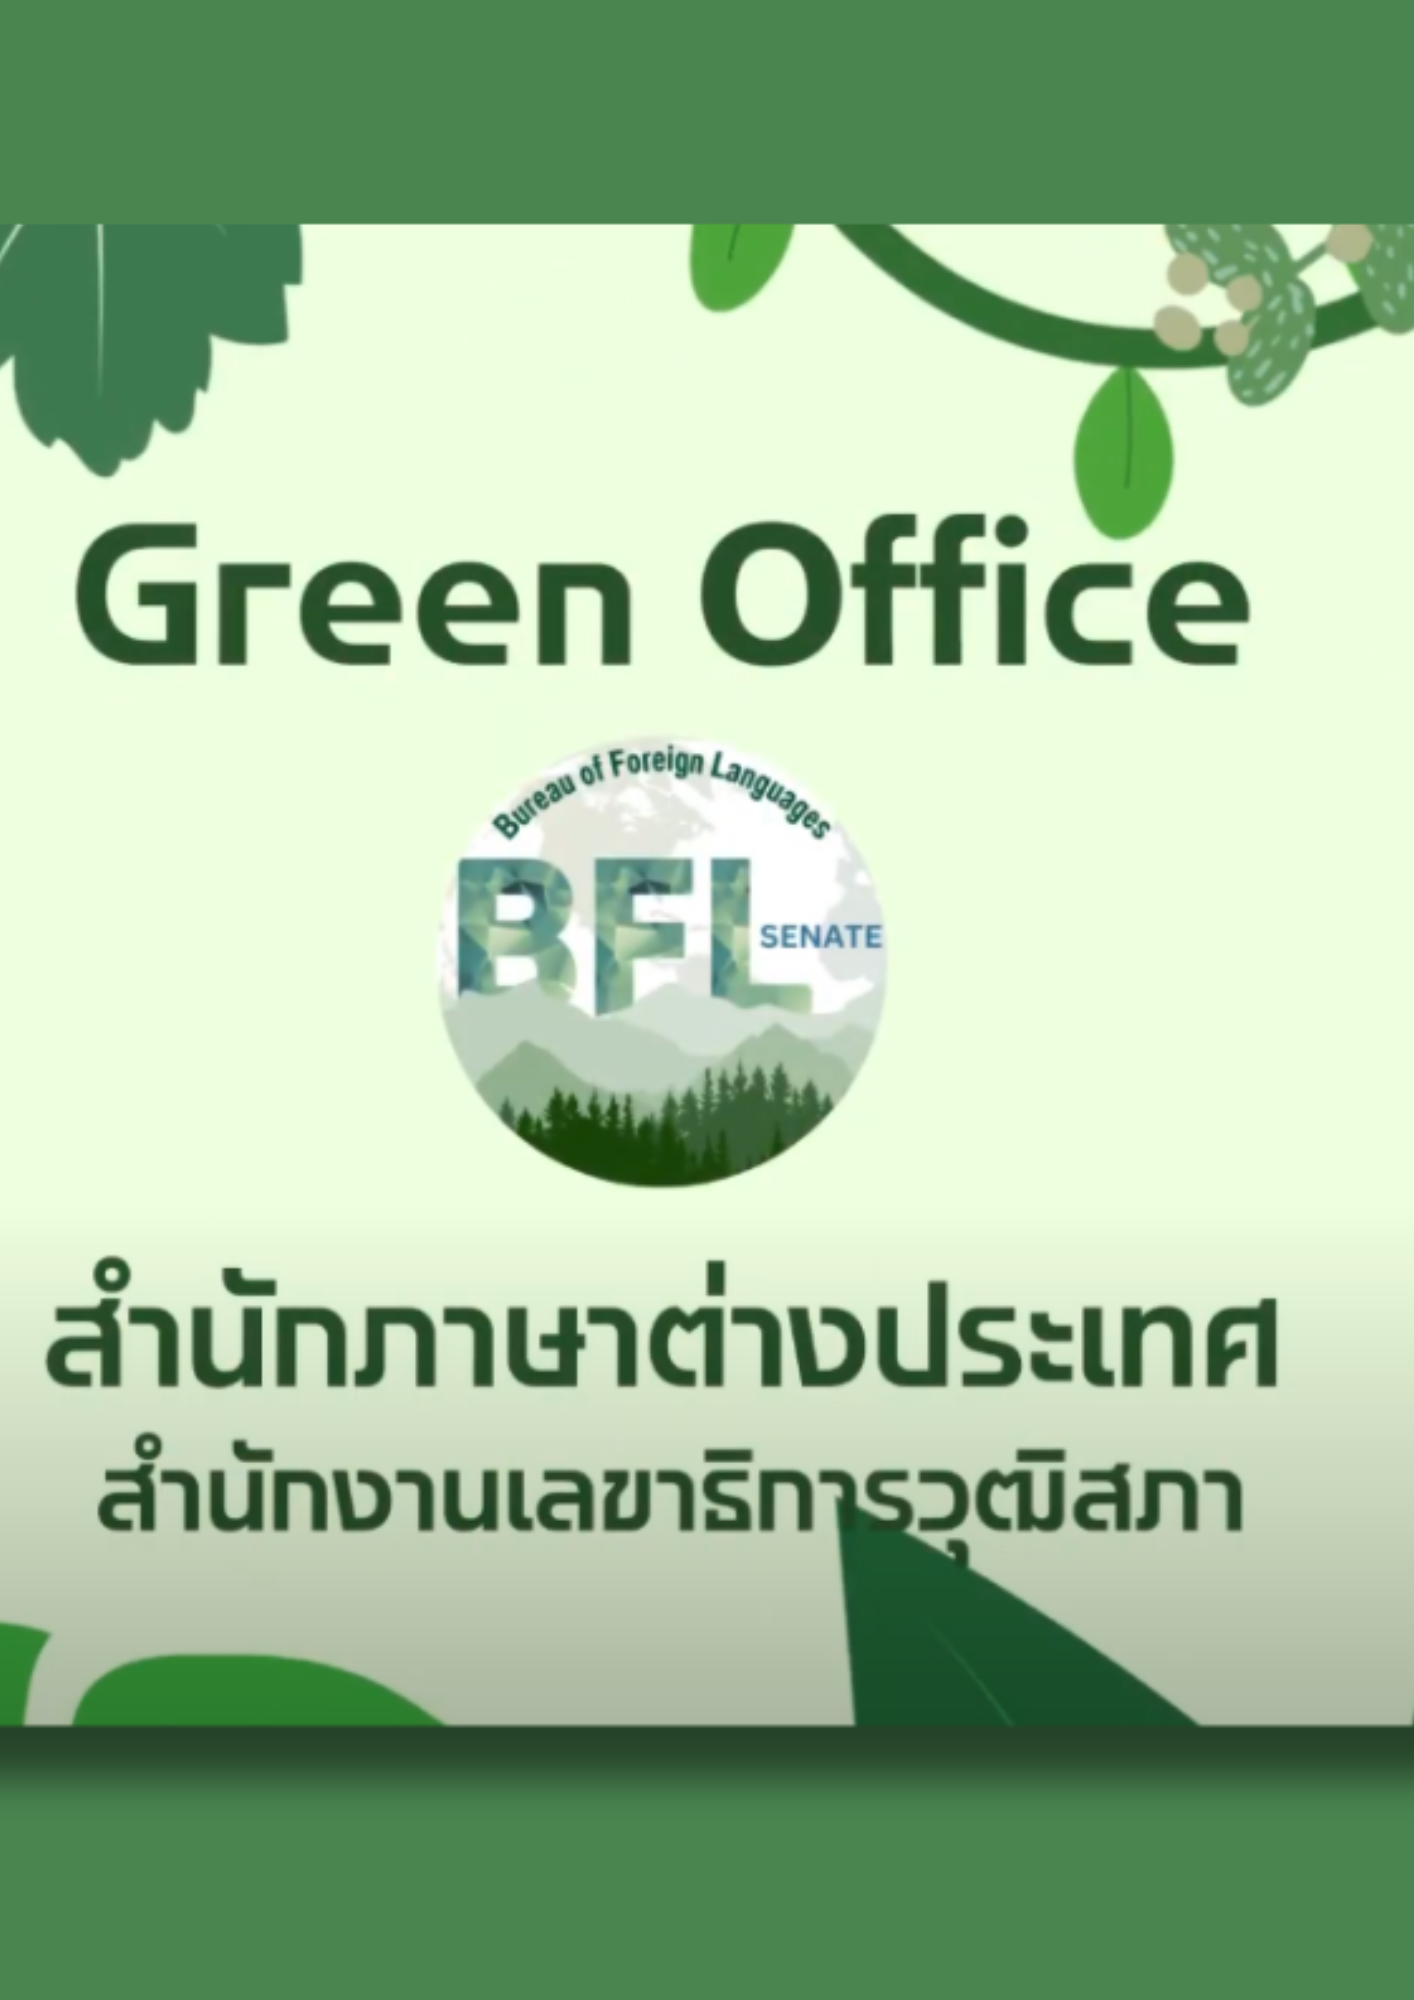 VDO Clip Green Office สำนักภาษาต่างประเทศ BFL Go Green